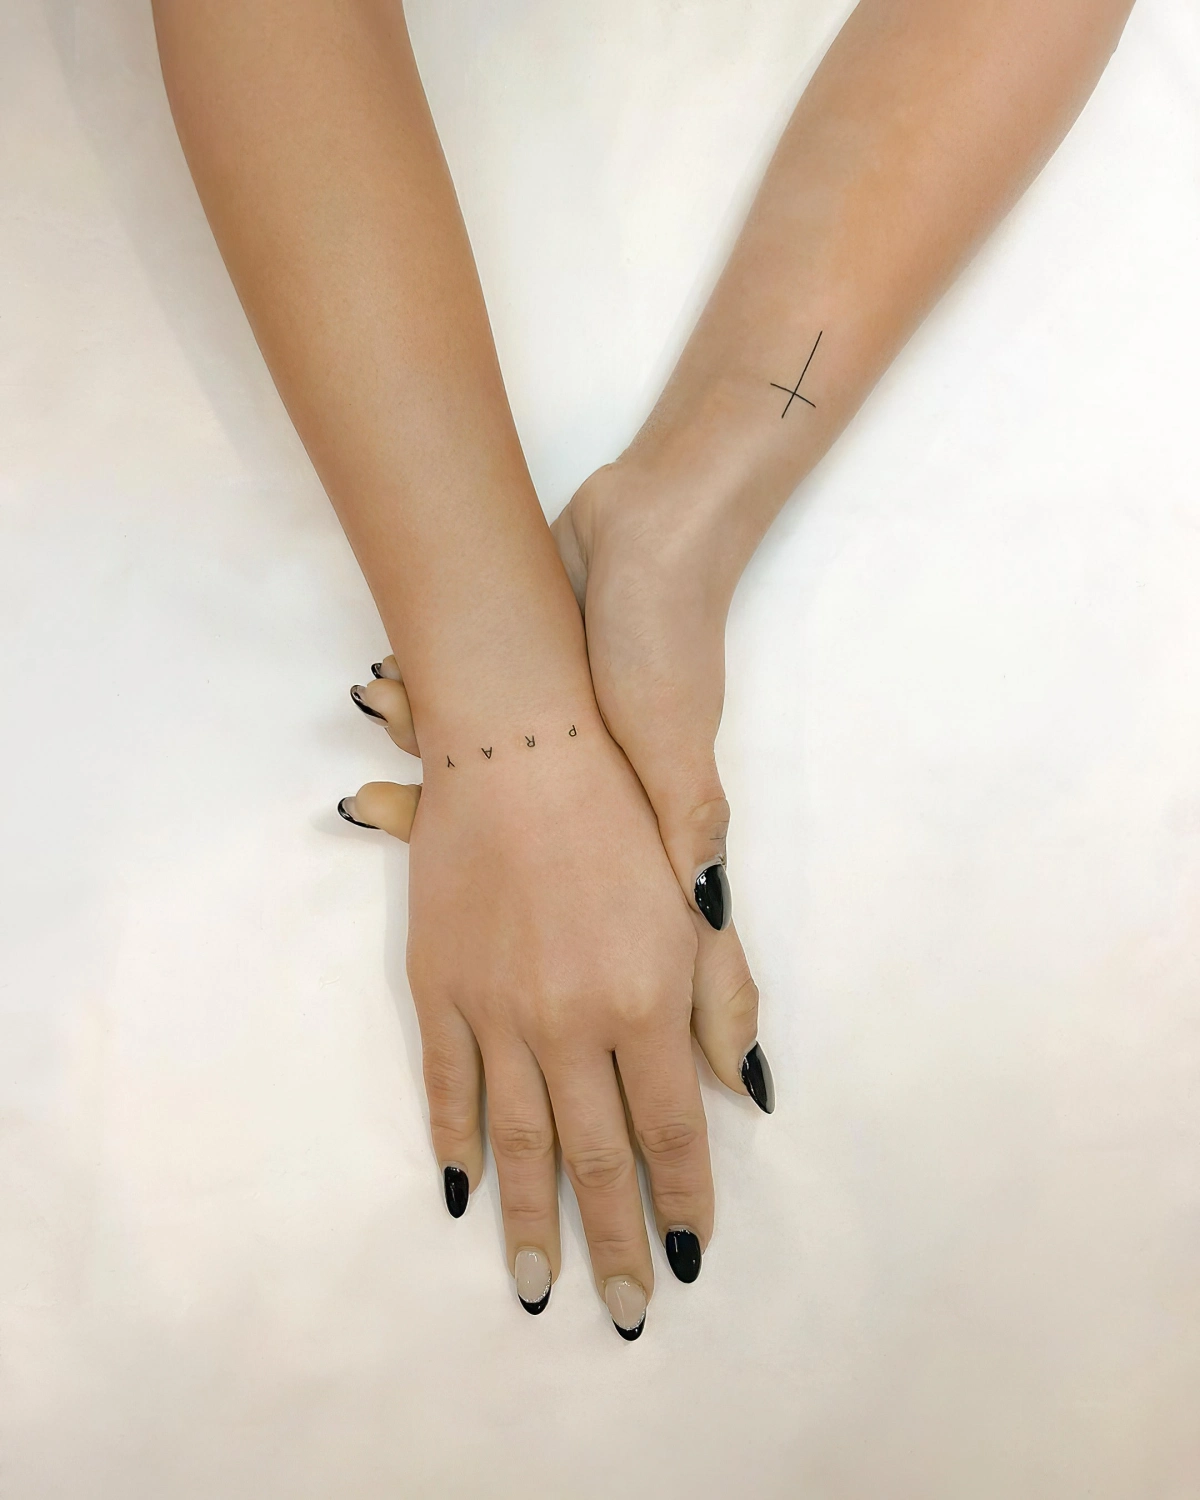 manucure vernis noir ongles longs nail art french tattoo croix poignet